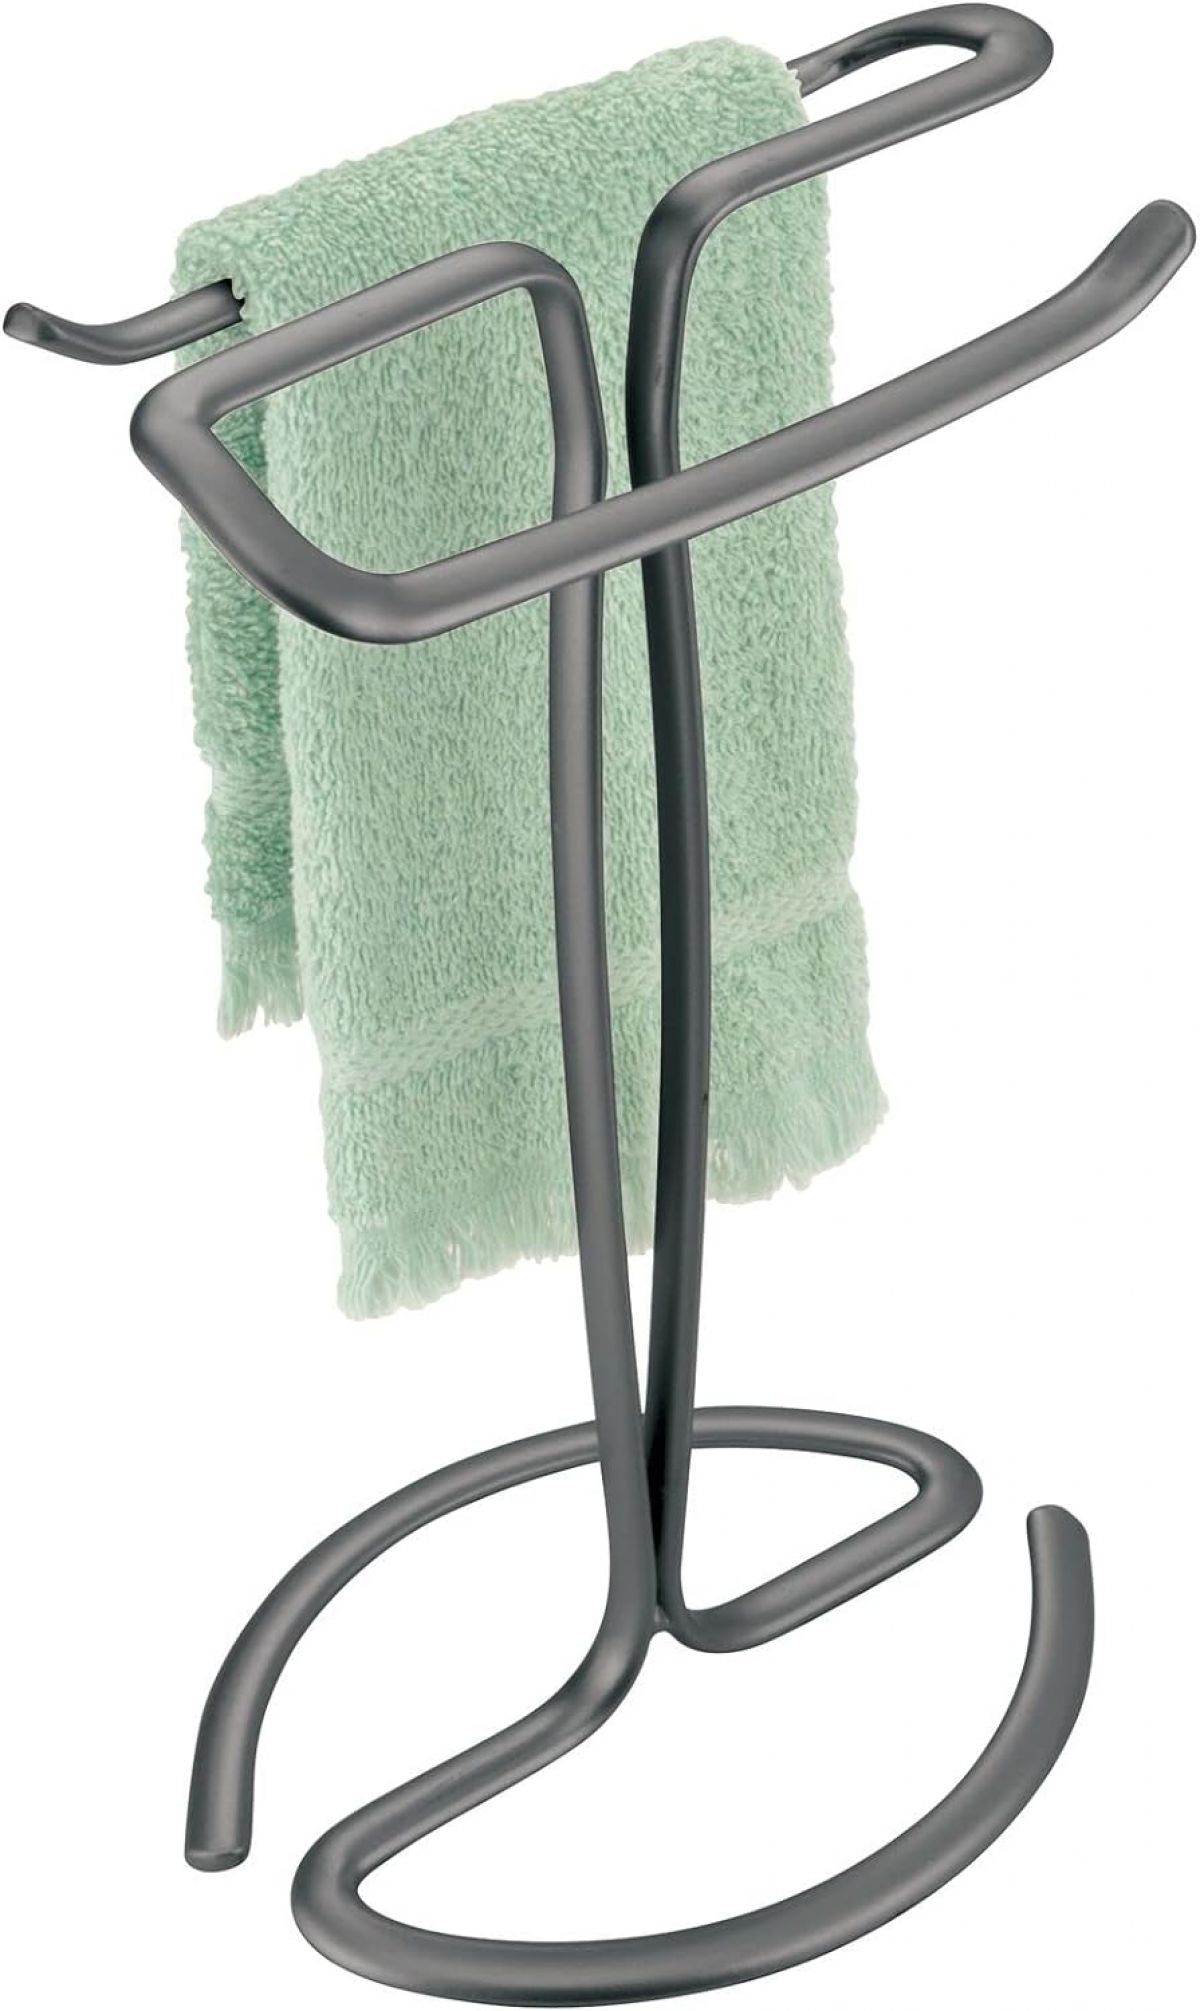 Towel rack mDesign